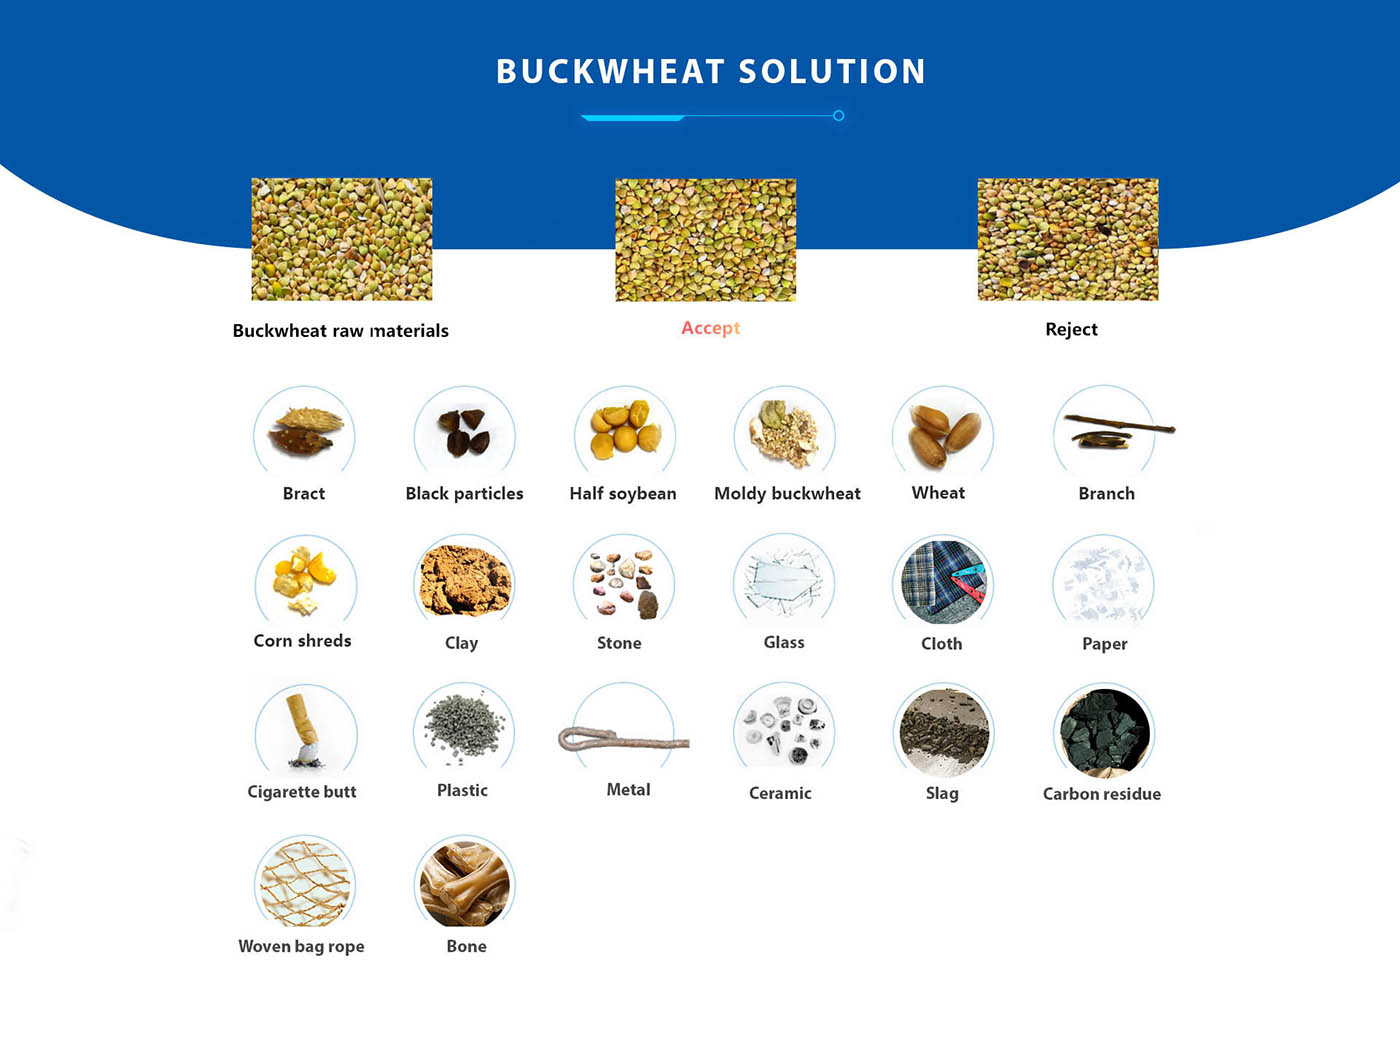 Buckwheat solution